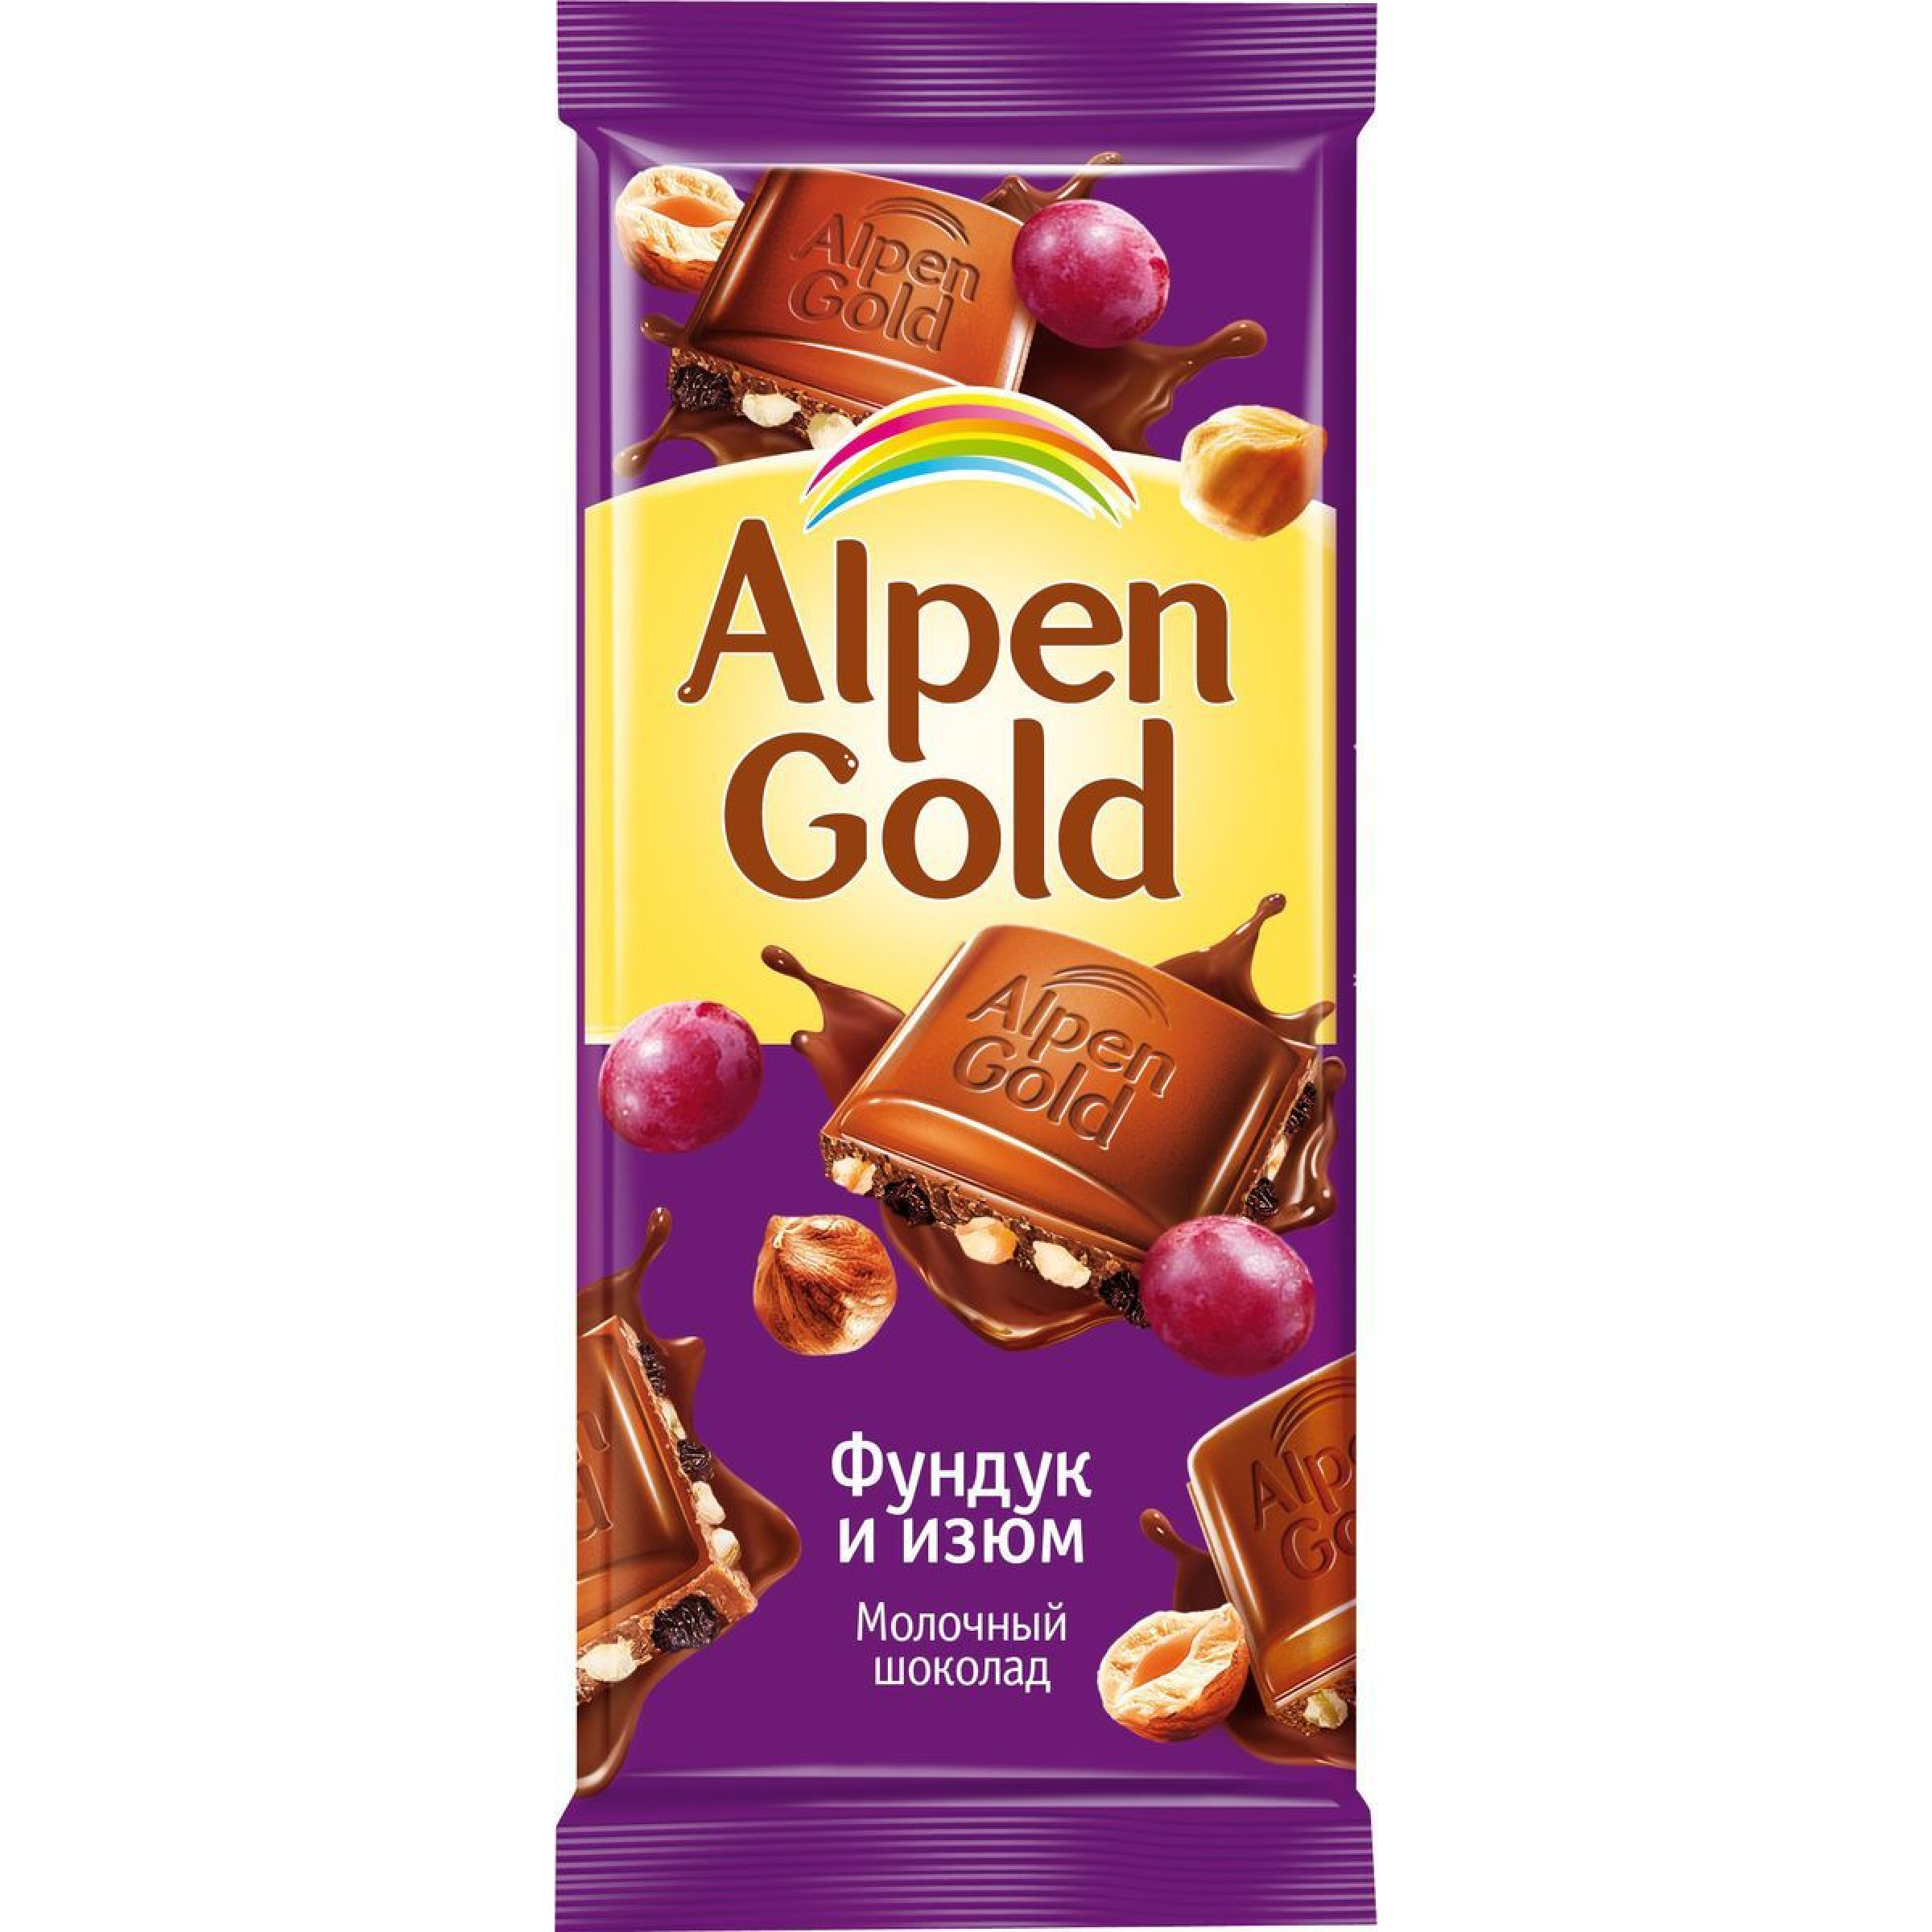 Шоколадка изюм орехи. Шоколад Альпен Голд молочный с фундуком 90г. Шоколад Alpen Gold молочный с фундуком и изюмом, 85 г. Шоколад Alpen Gold молочный фундук и Изюм 90г. Шоколад Alpen Gold 90/85г молочный.